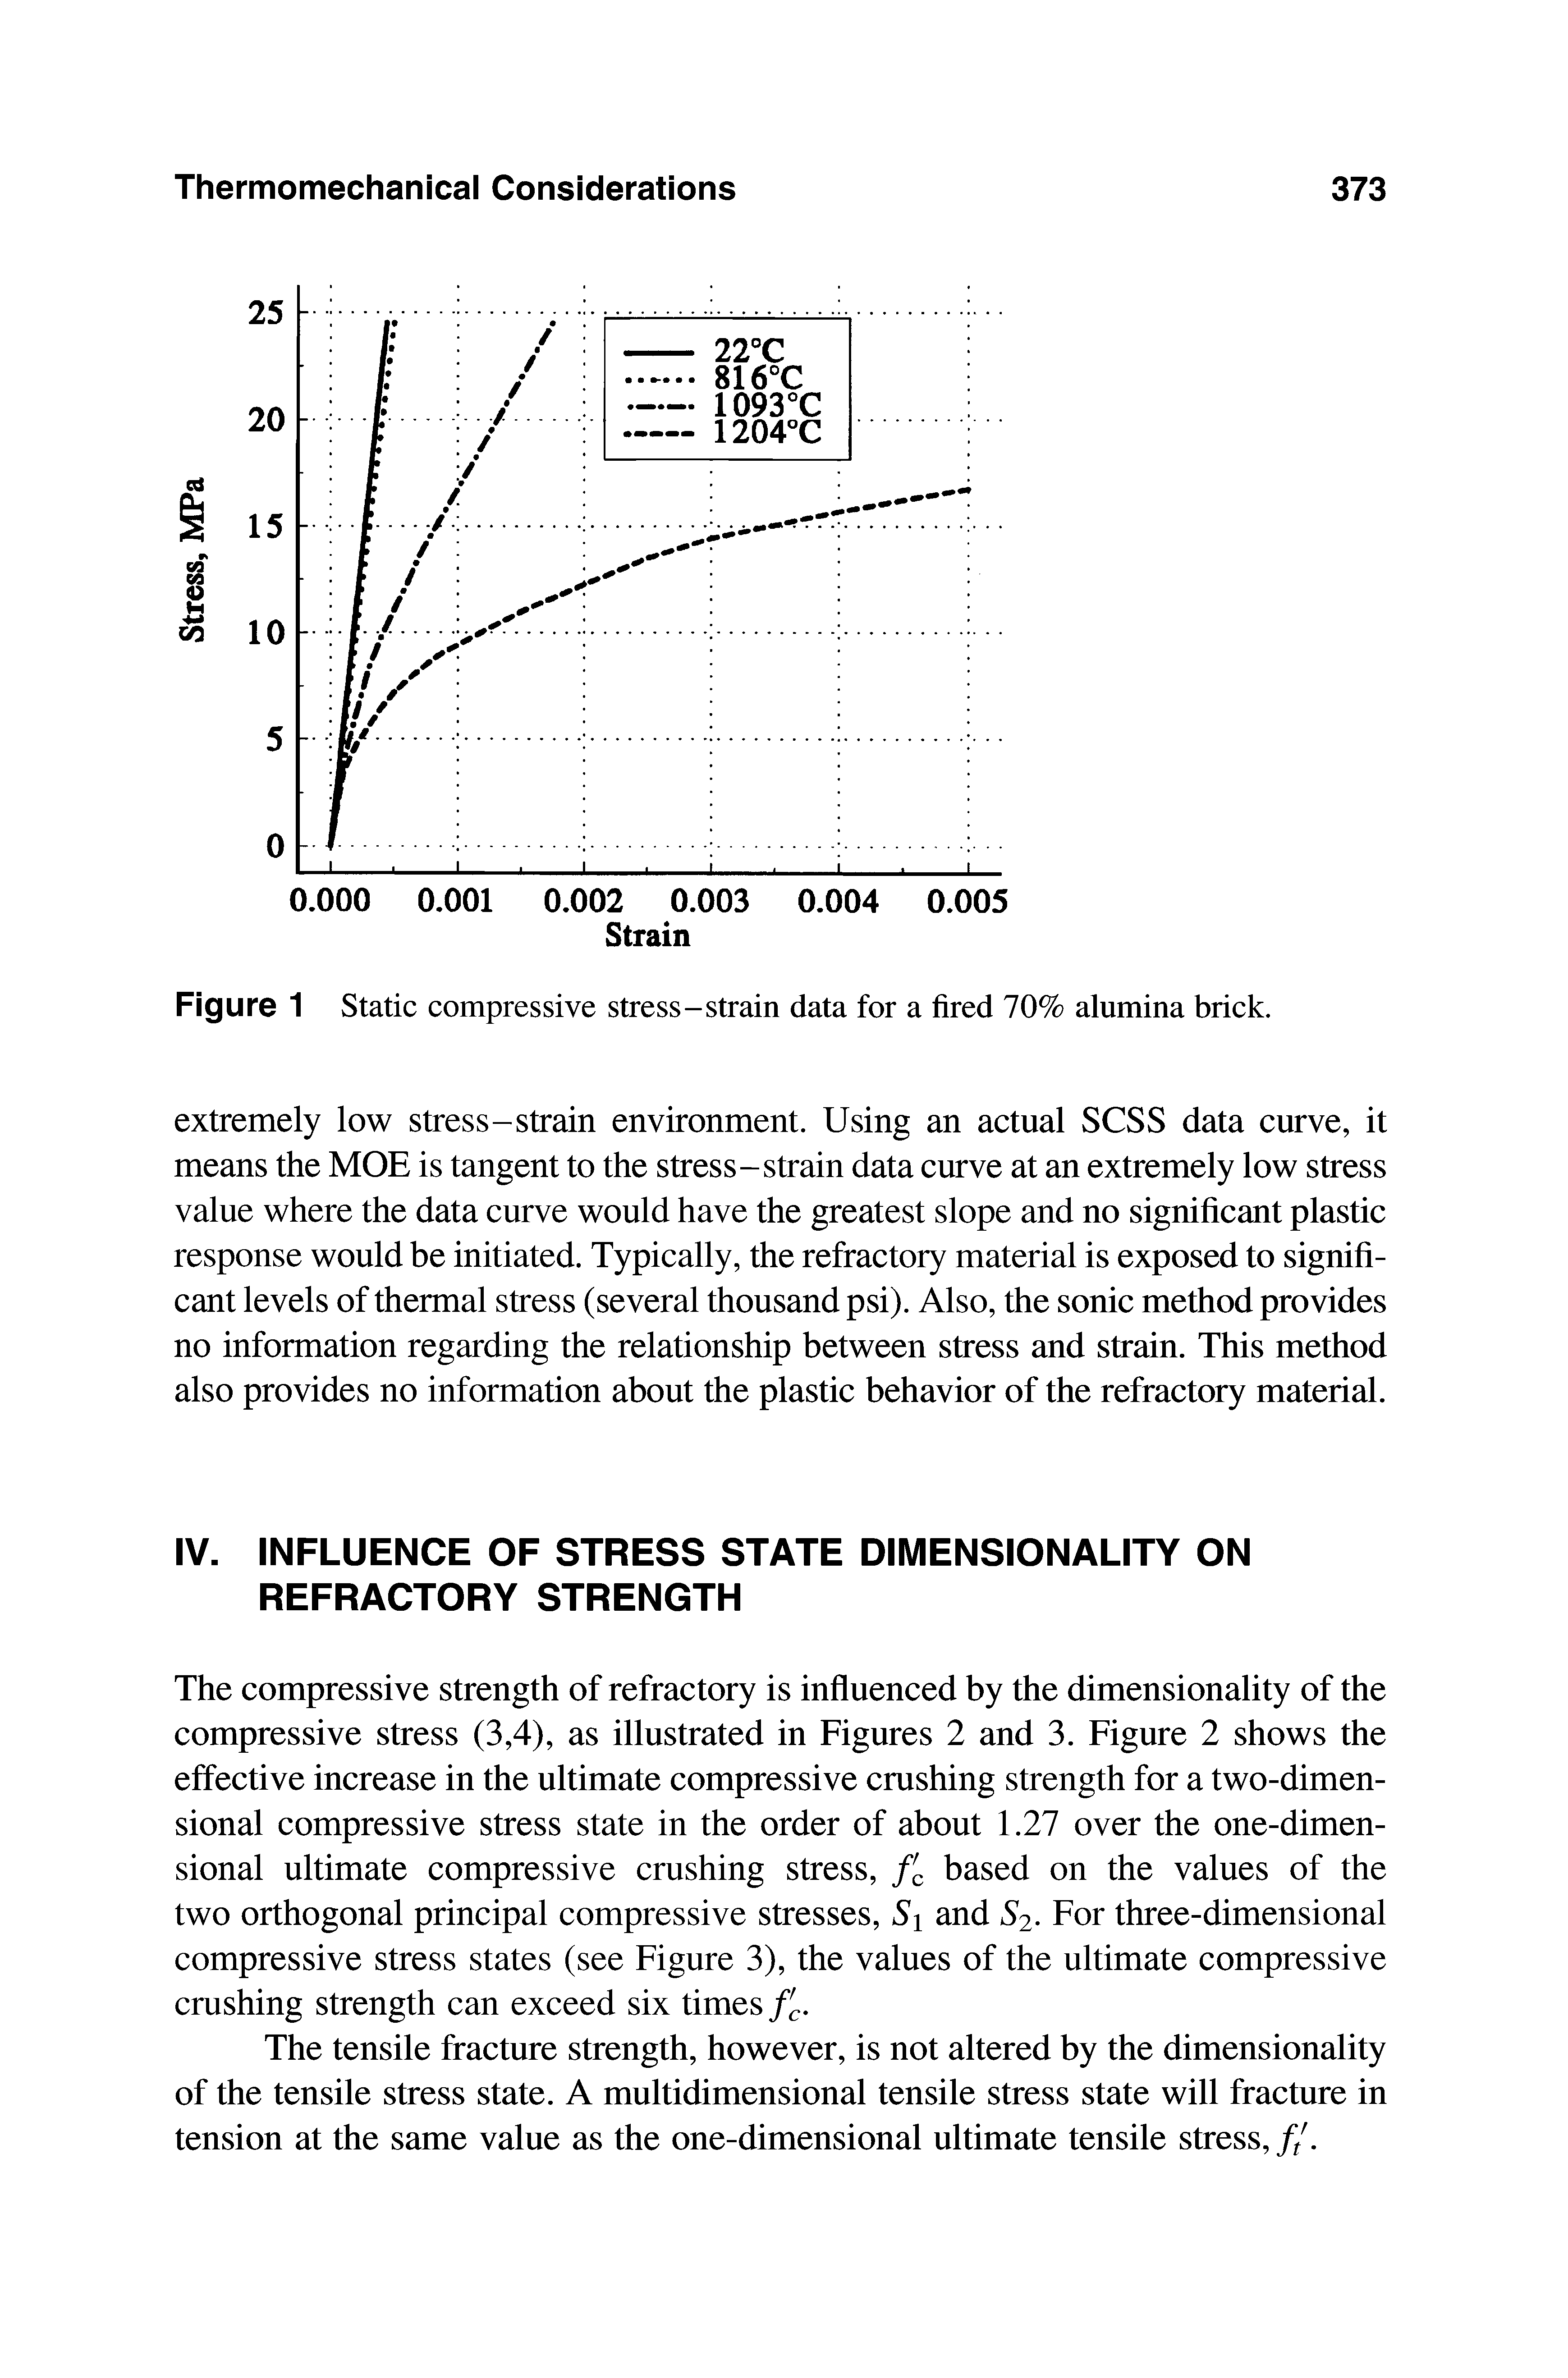 Figure 1 Static compressive stress-strain data for a fired 70% alumina brick.